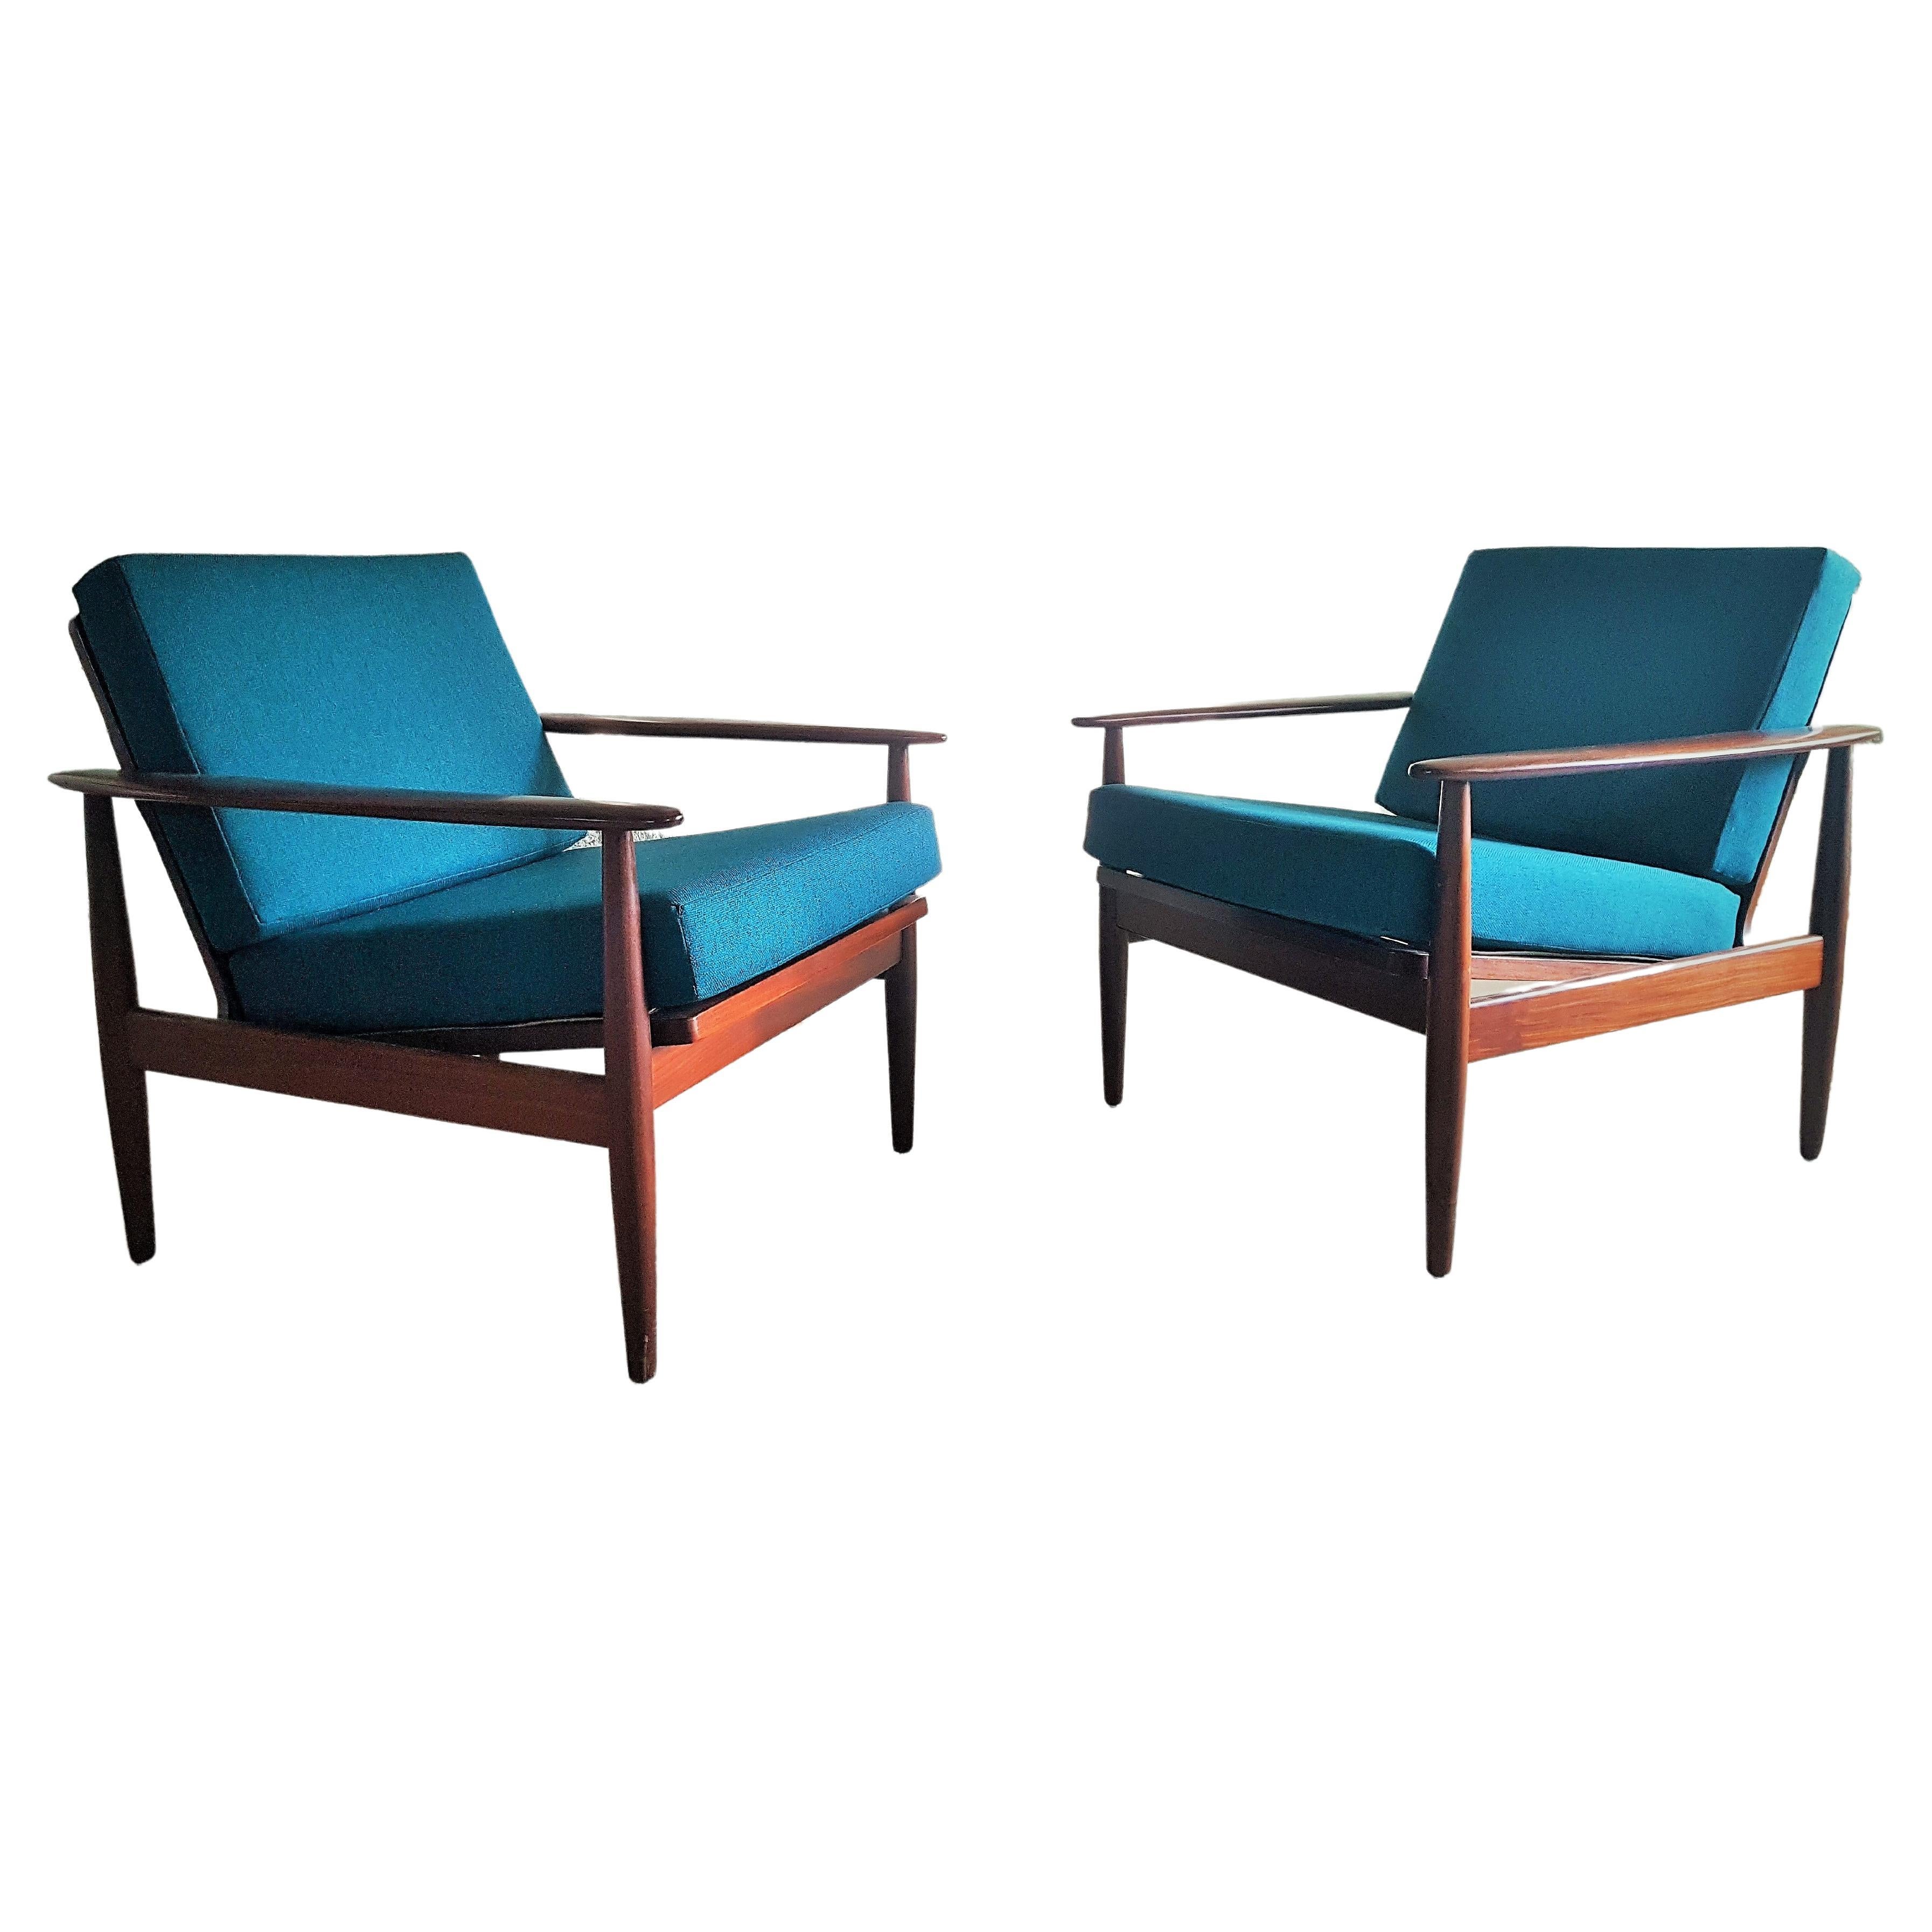 Pair of Mid-Century Scandinavian Teak Lounge Chair Armchair, Denmark, 1960 For Sale